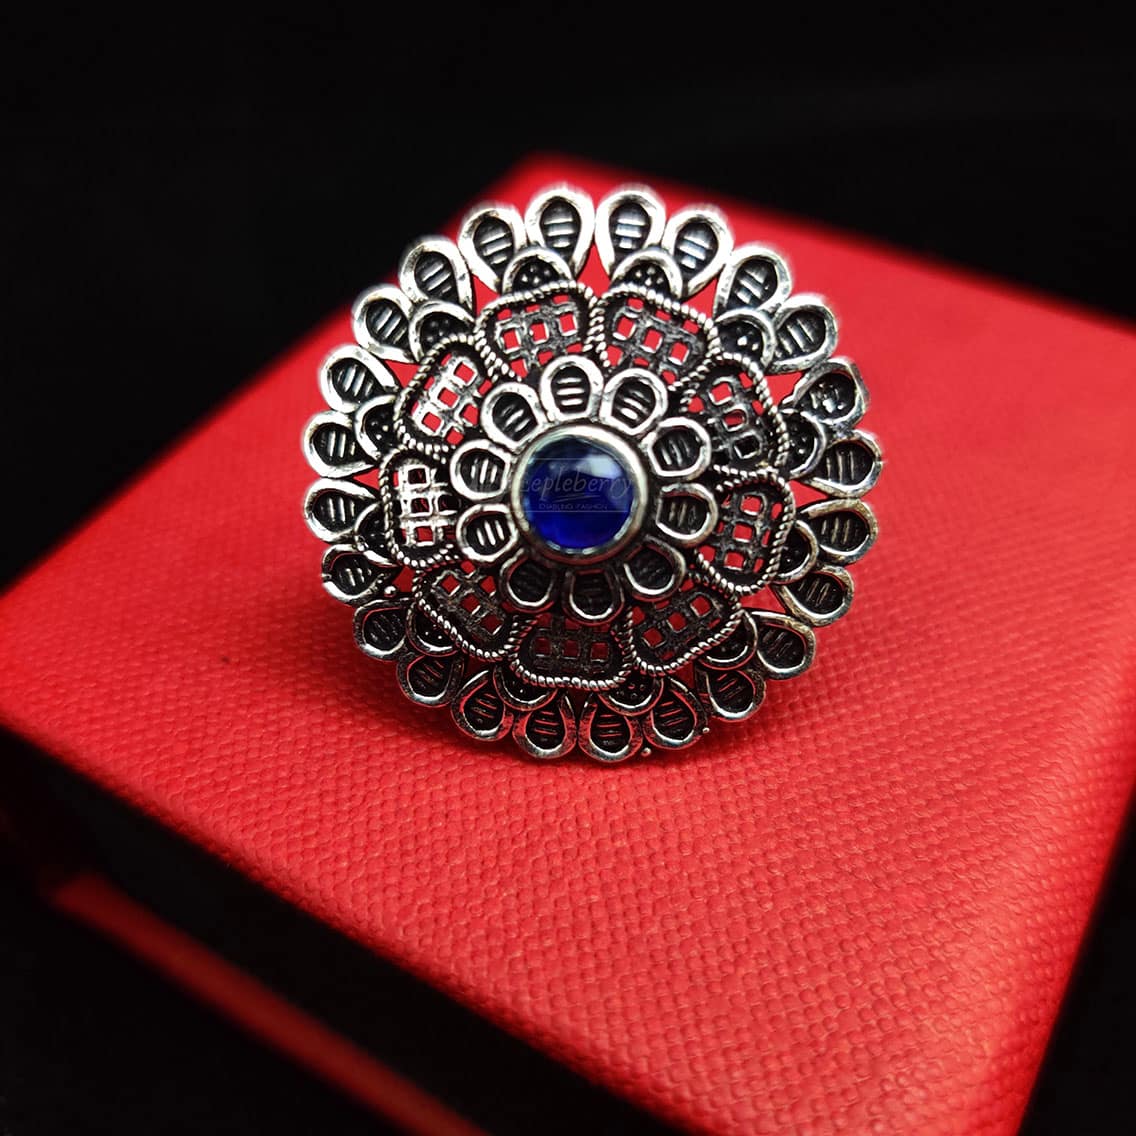 Buy Silver Rings, Trendy Oxidised Rings, Adjustable Rings, Statement Silver  Rings, Gift for Women Online in India - Etsy